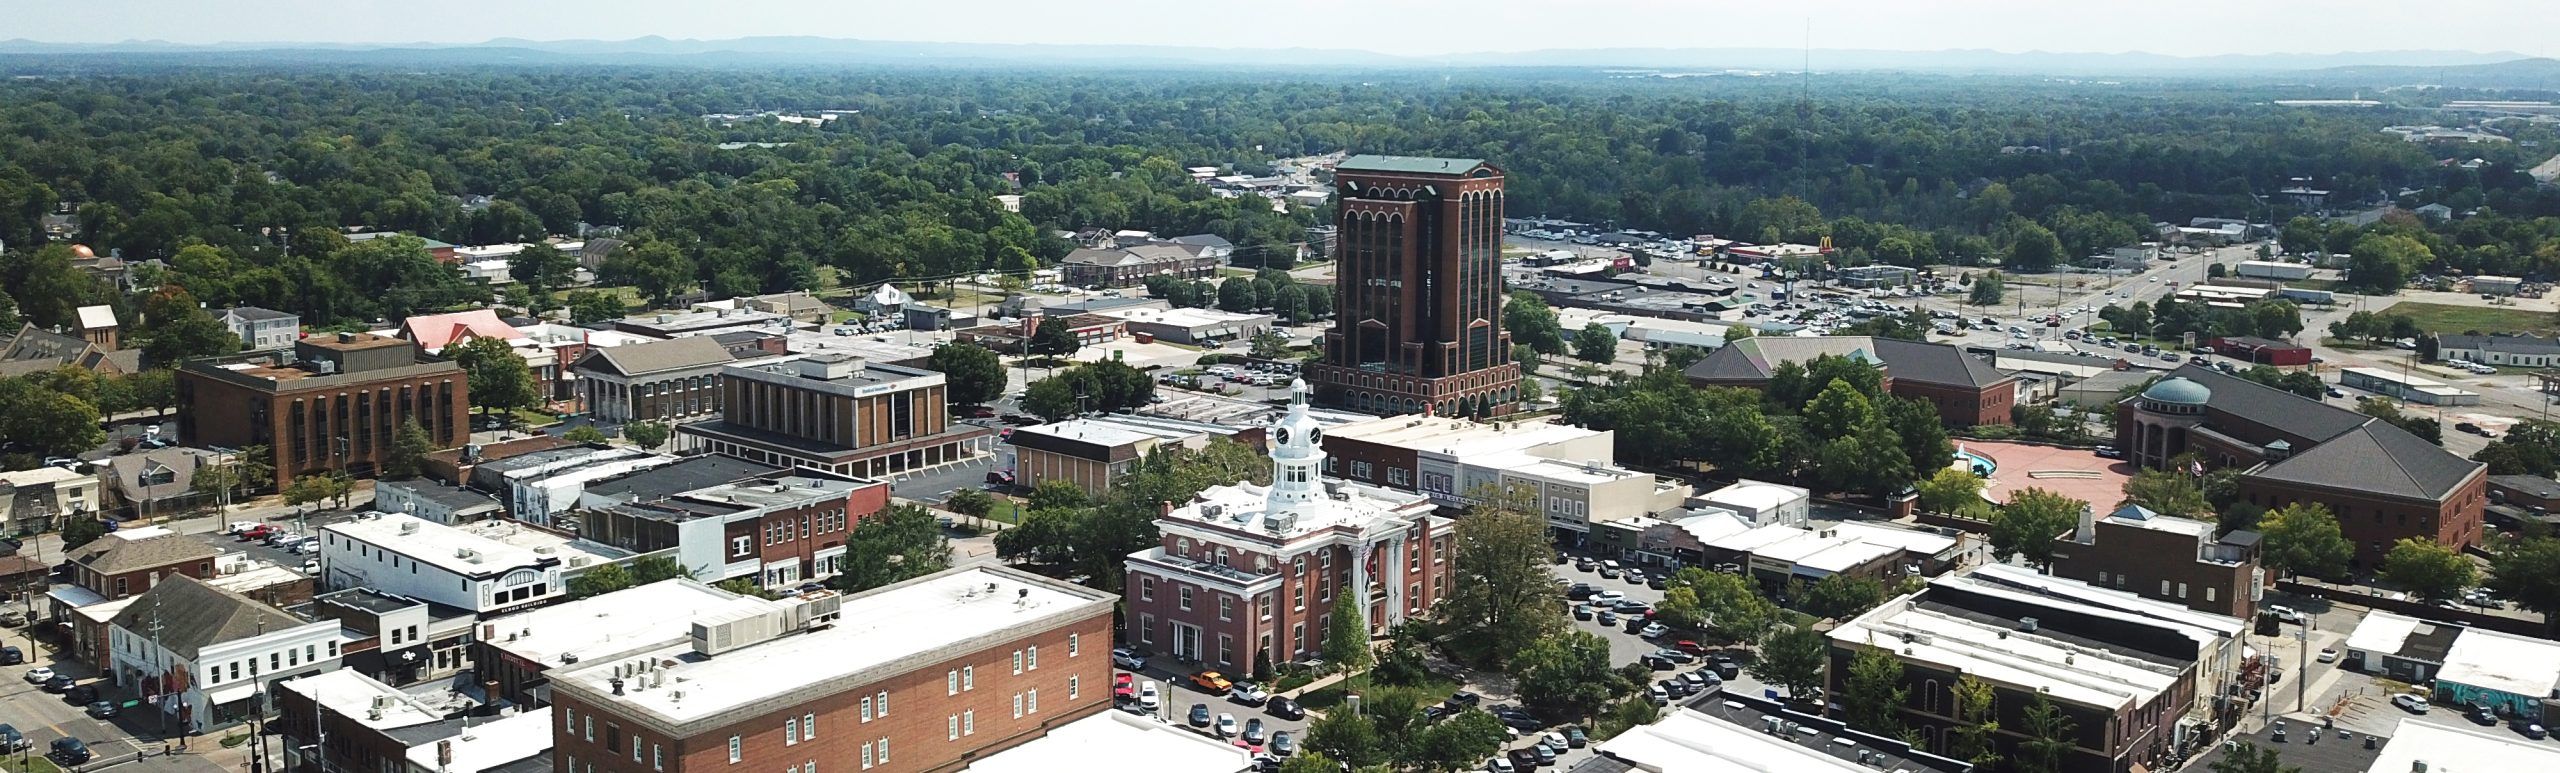 Murfreesboro Downtown with Swanson Companies 